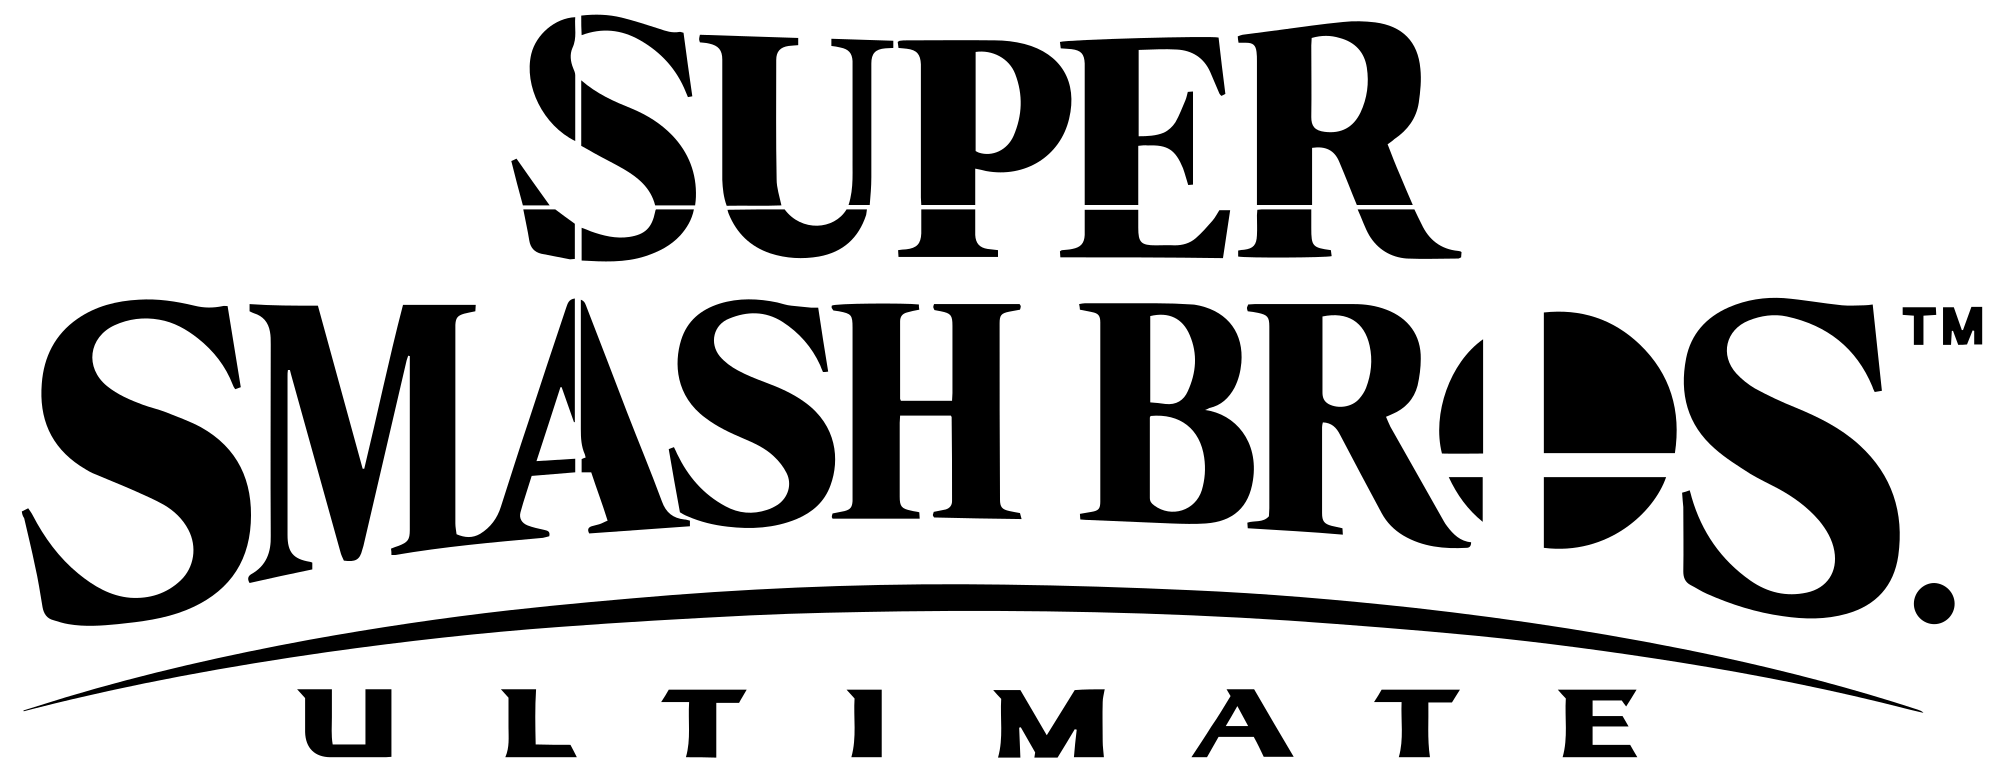 Smash Logo - File:Super Smash Bros. Ultimate logo.svg - Wikimedia Commons